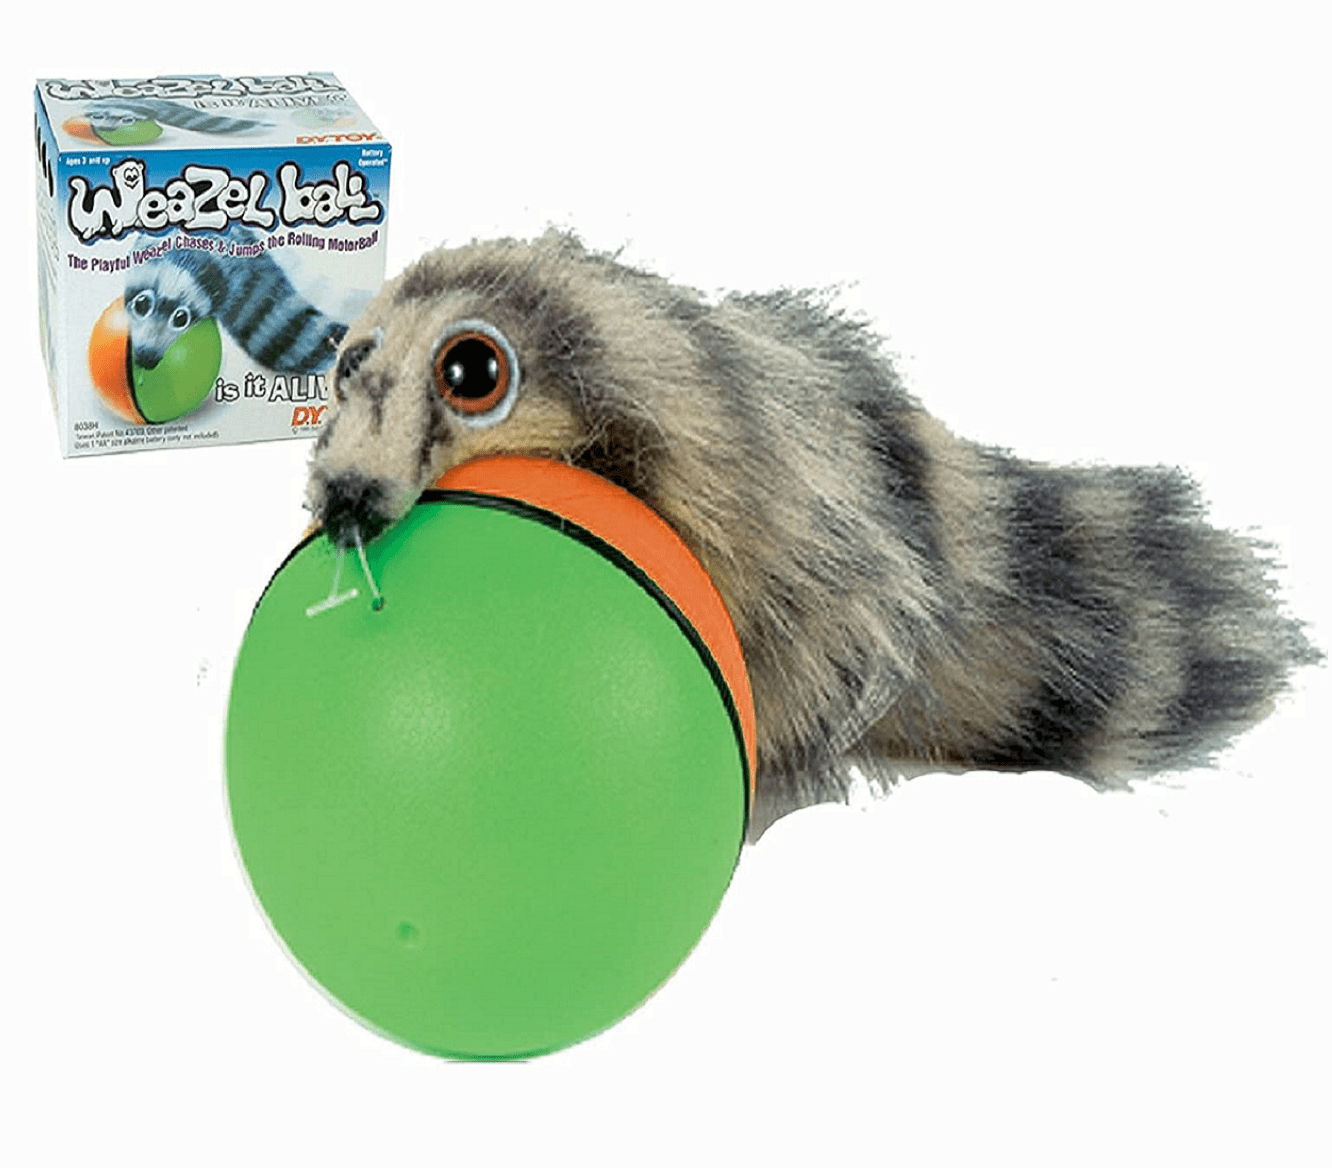 Original Weazel Weasel Ball Prank Gift Fun Toy for Dog Cat Pets Children Kid Fun 